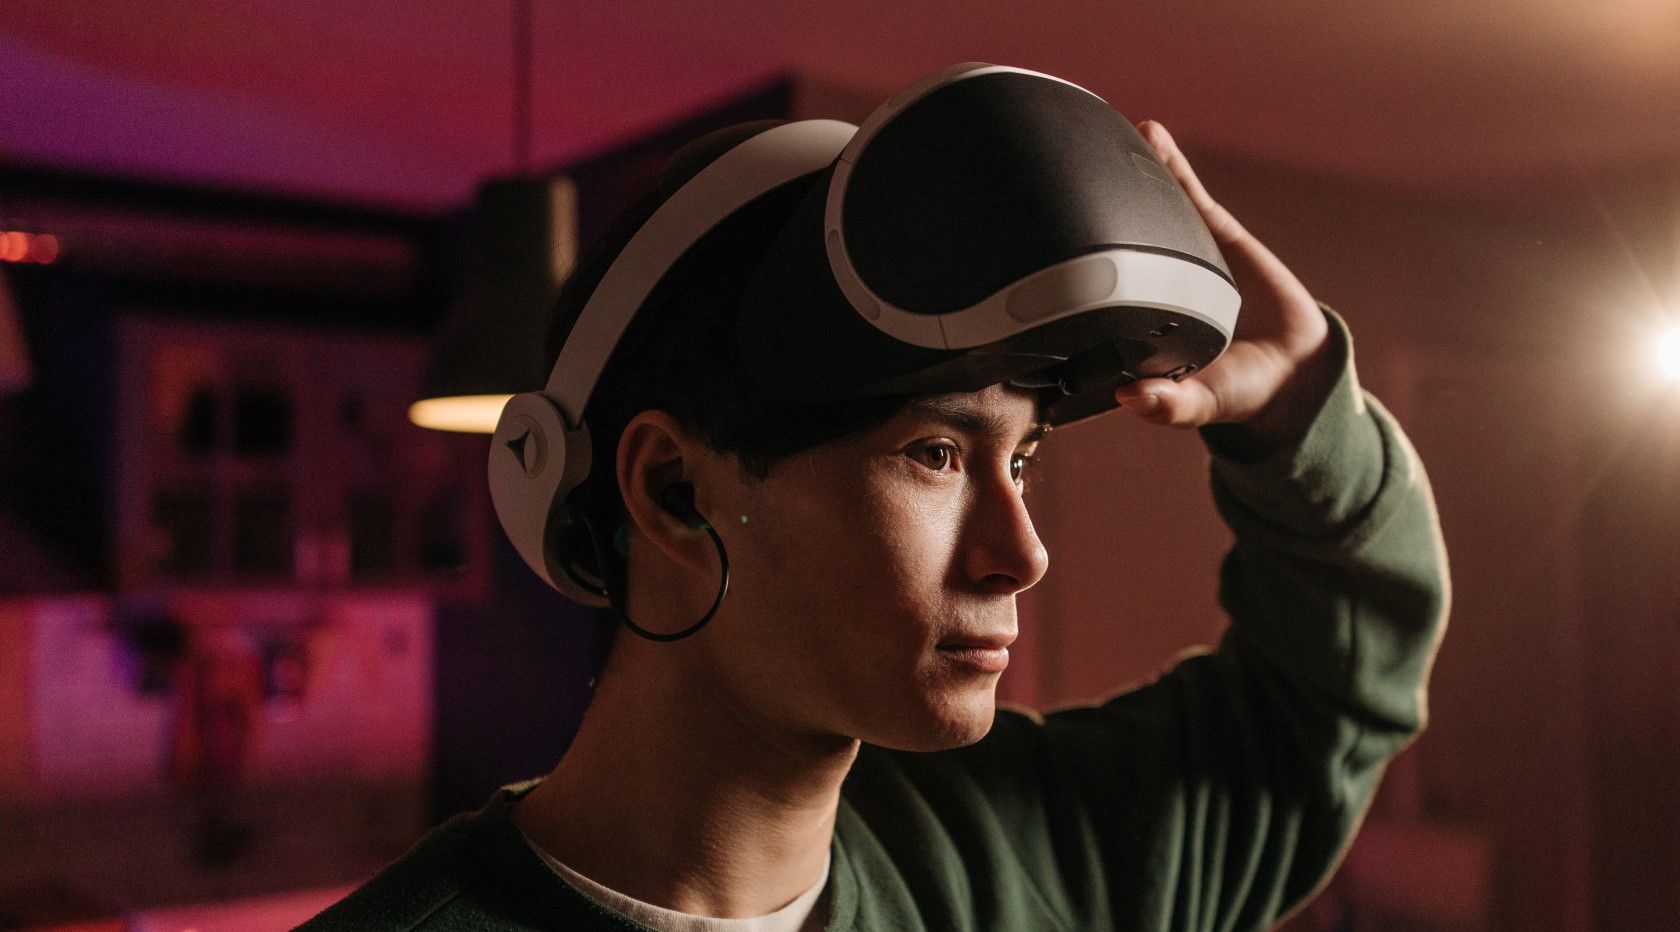 Man holding virtual reality headset above eyes